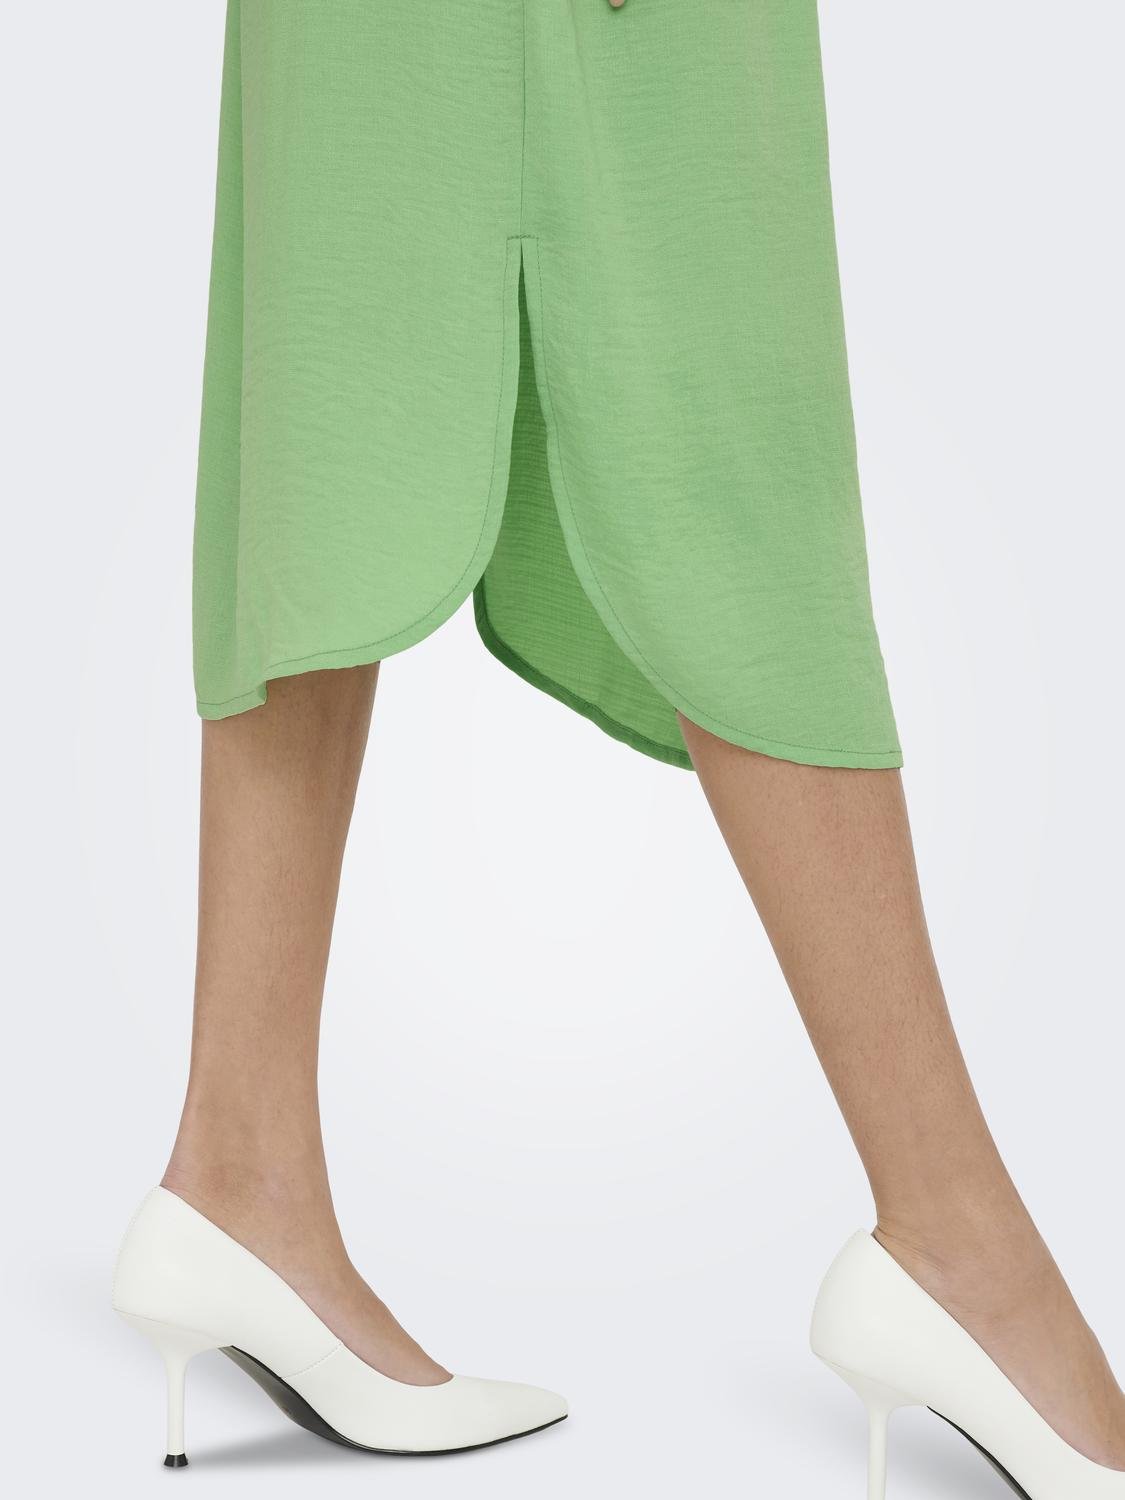 ONLY Midi Short sleeved dress -Absinthe Green - 15261870